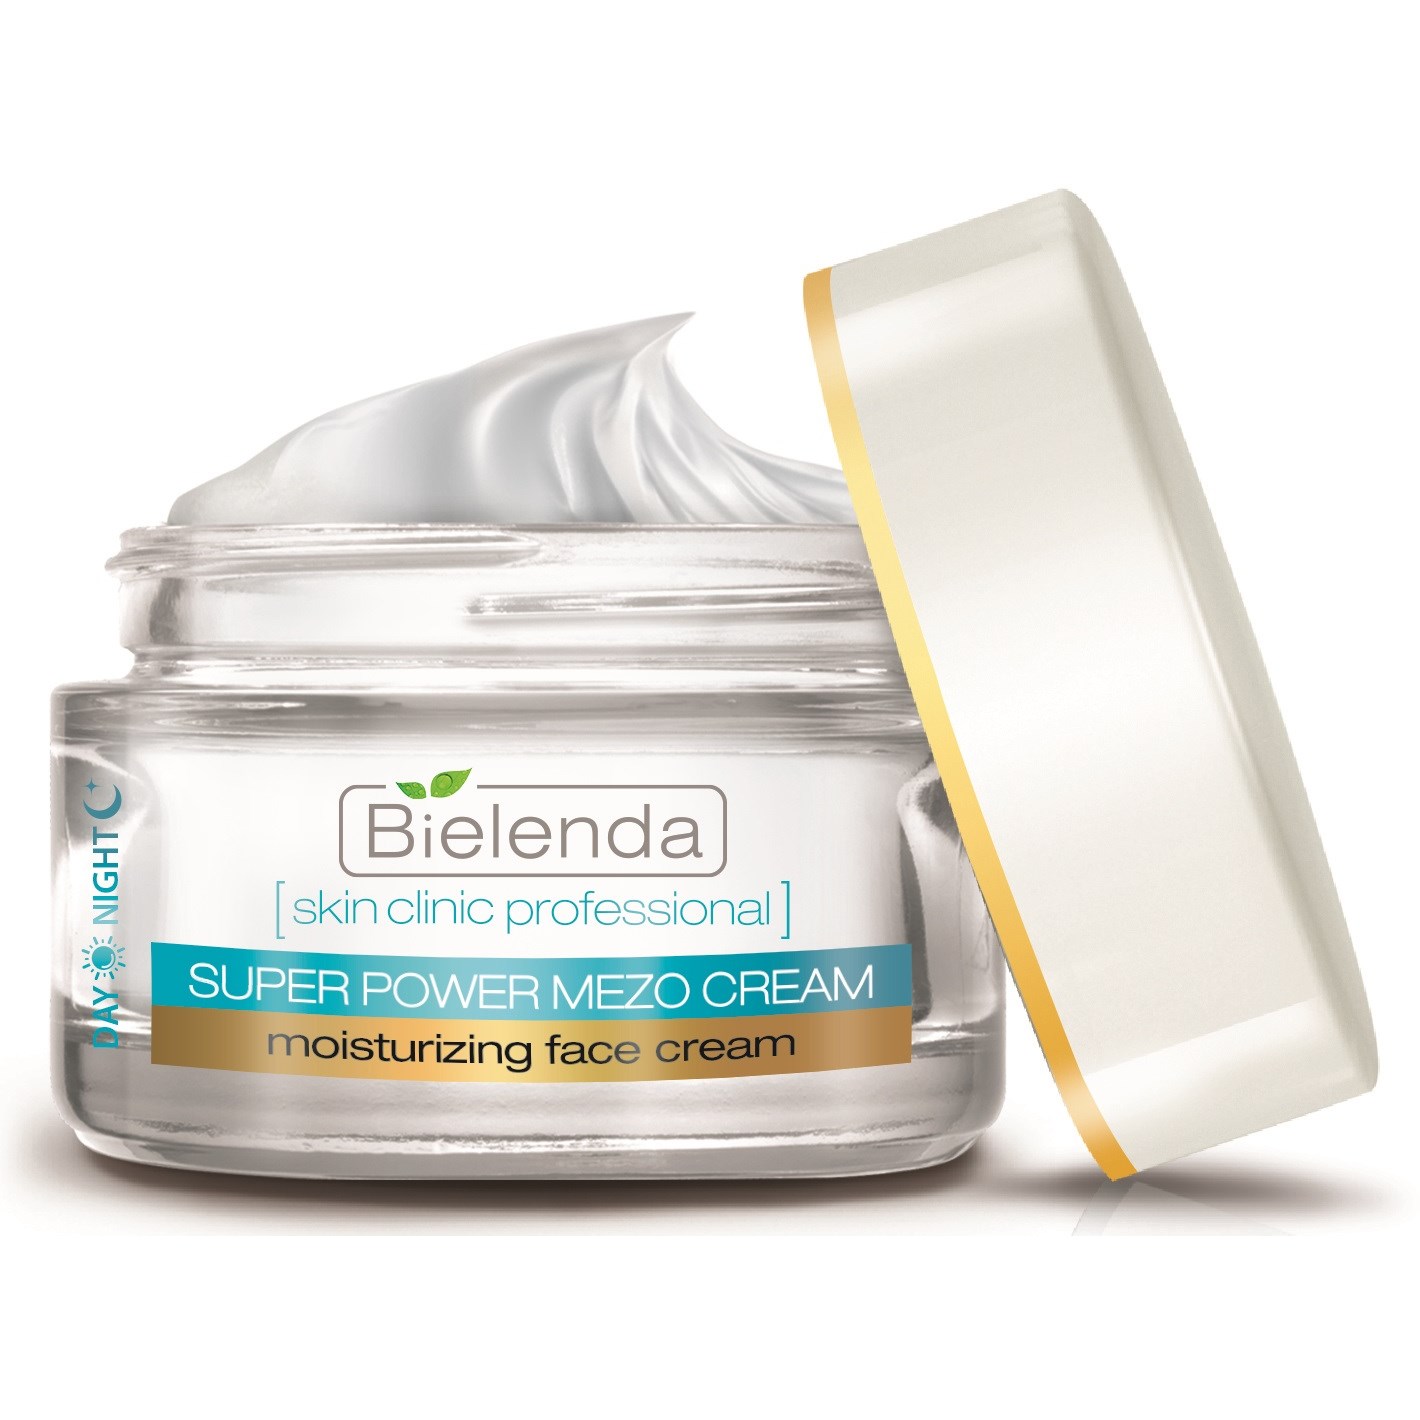 Bielenda SKIN CLINIC PROFESSIONAL day/night face cream with biomi